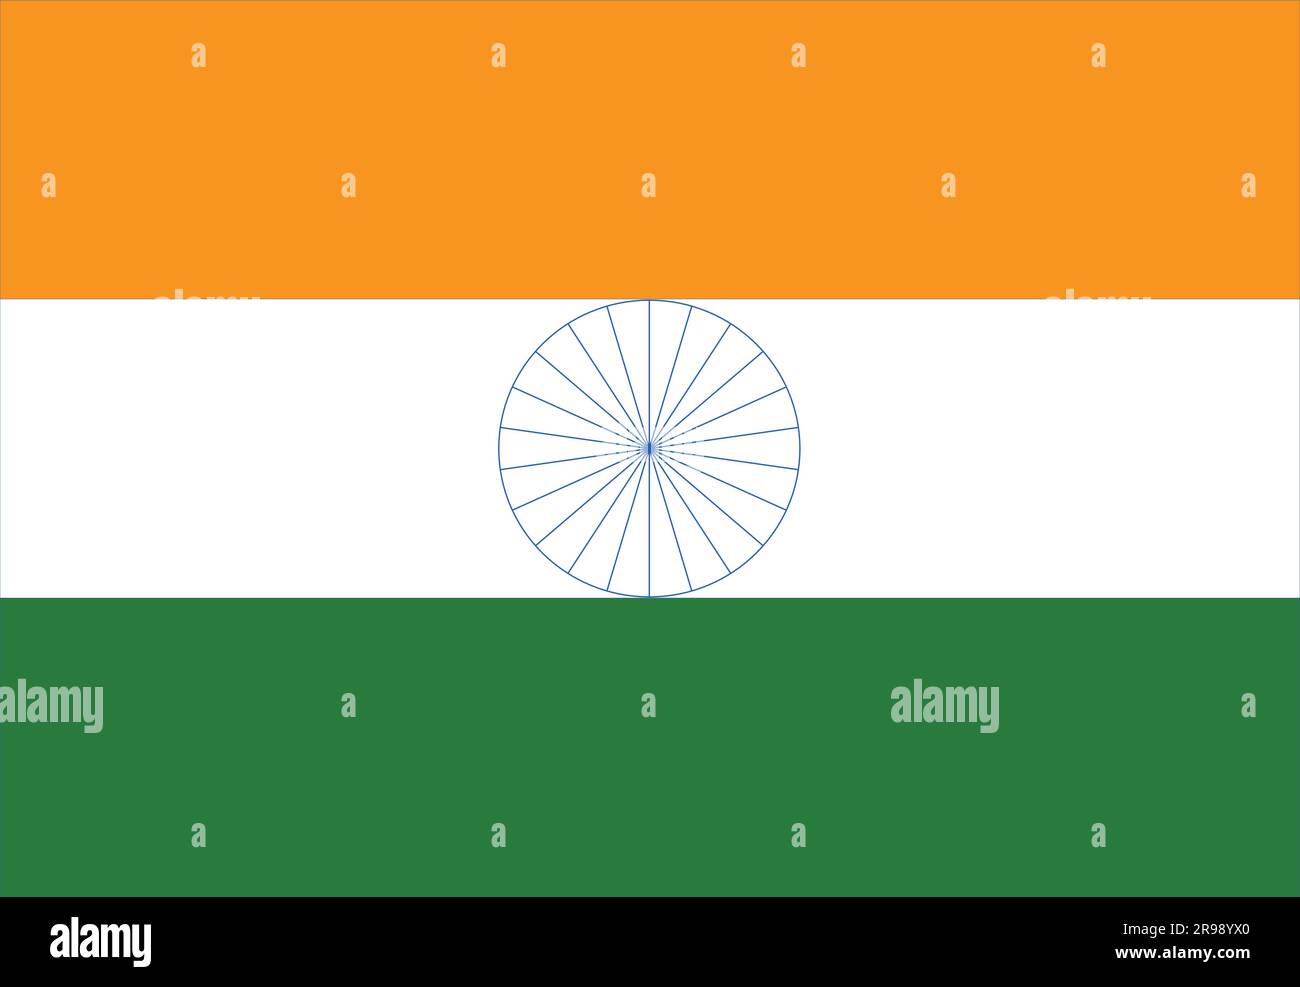 How to draw flag of Nepal using CorelDraw X6? ~ Infotech-Easy